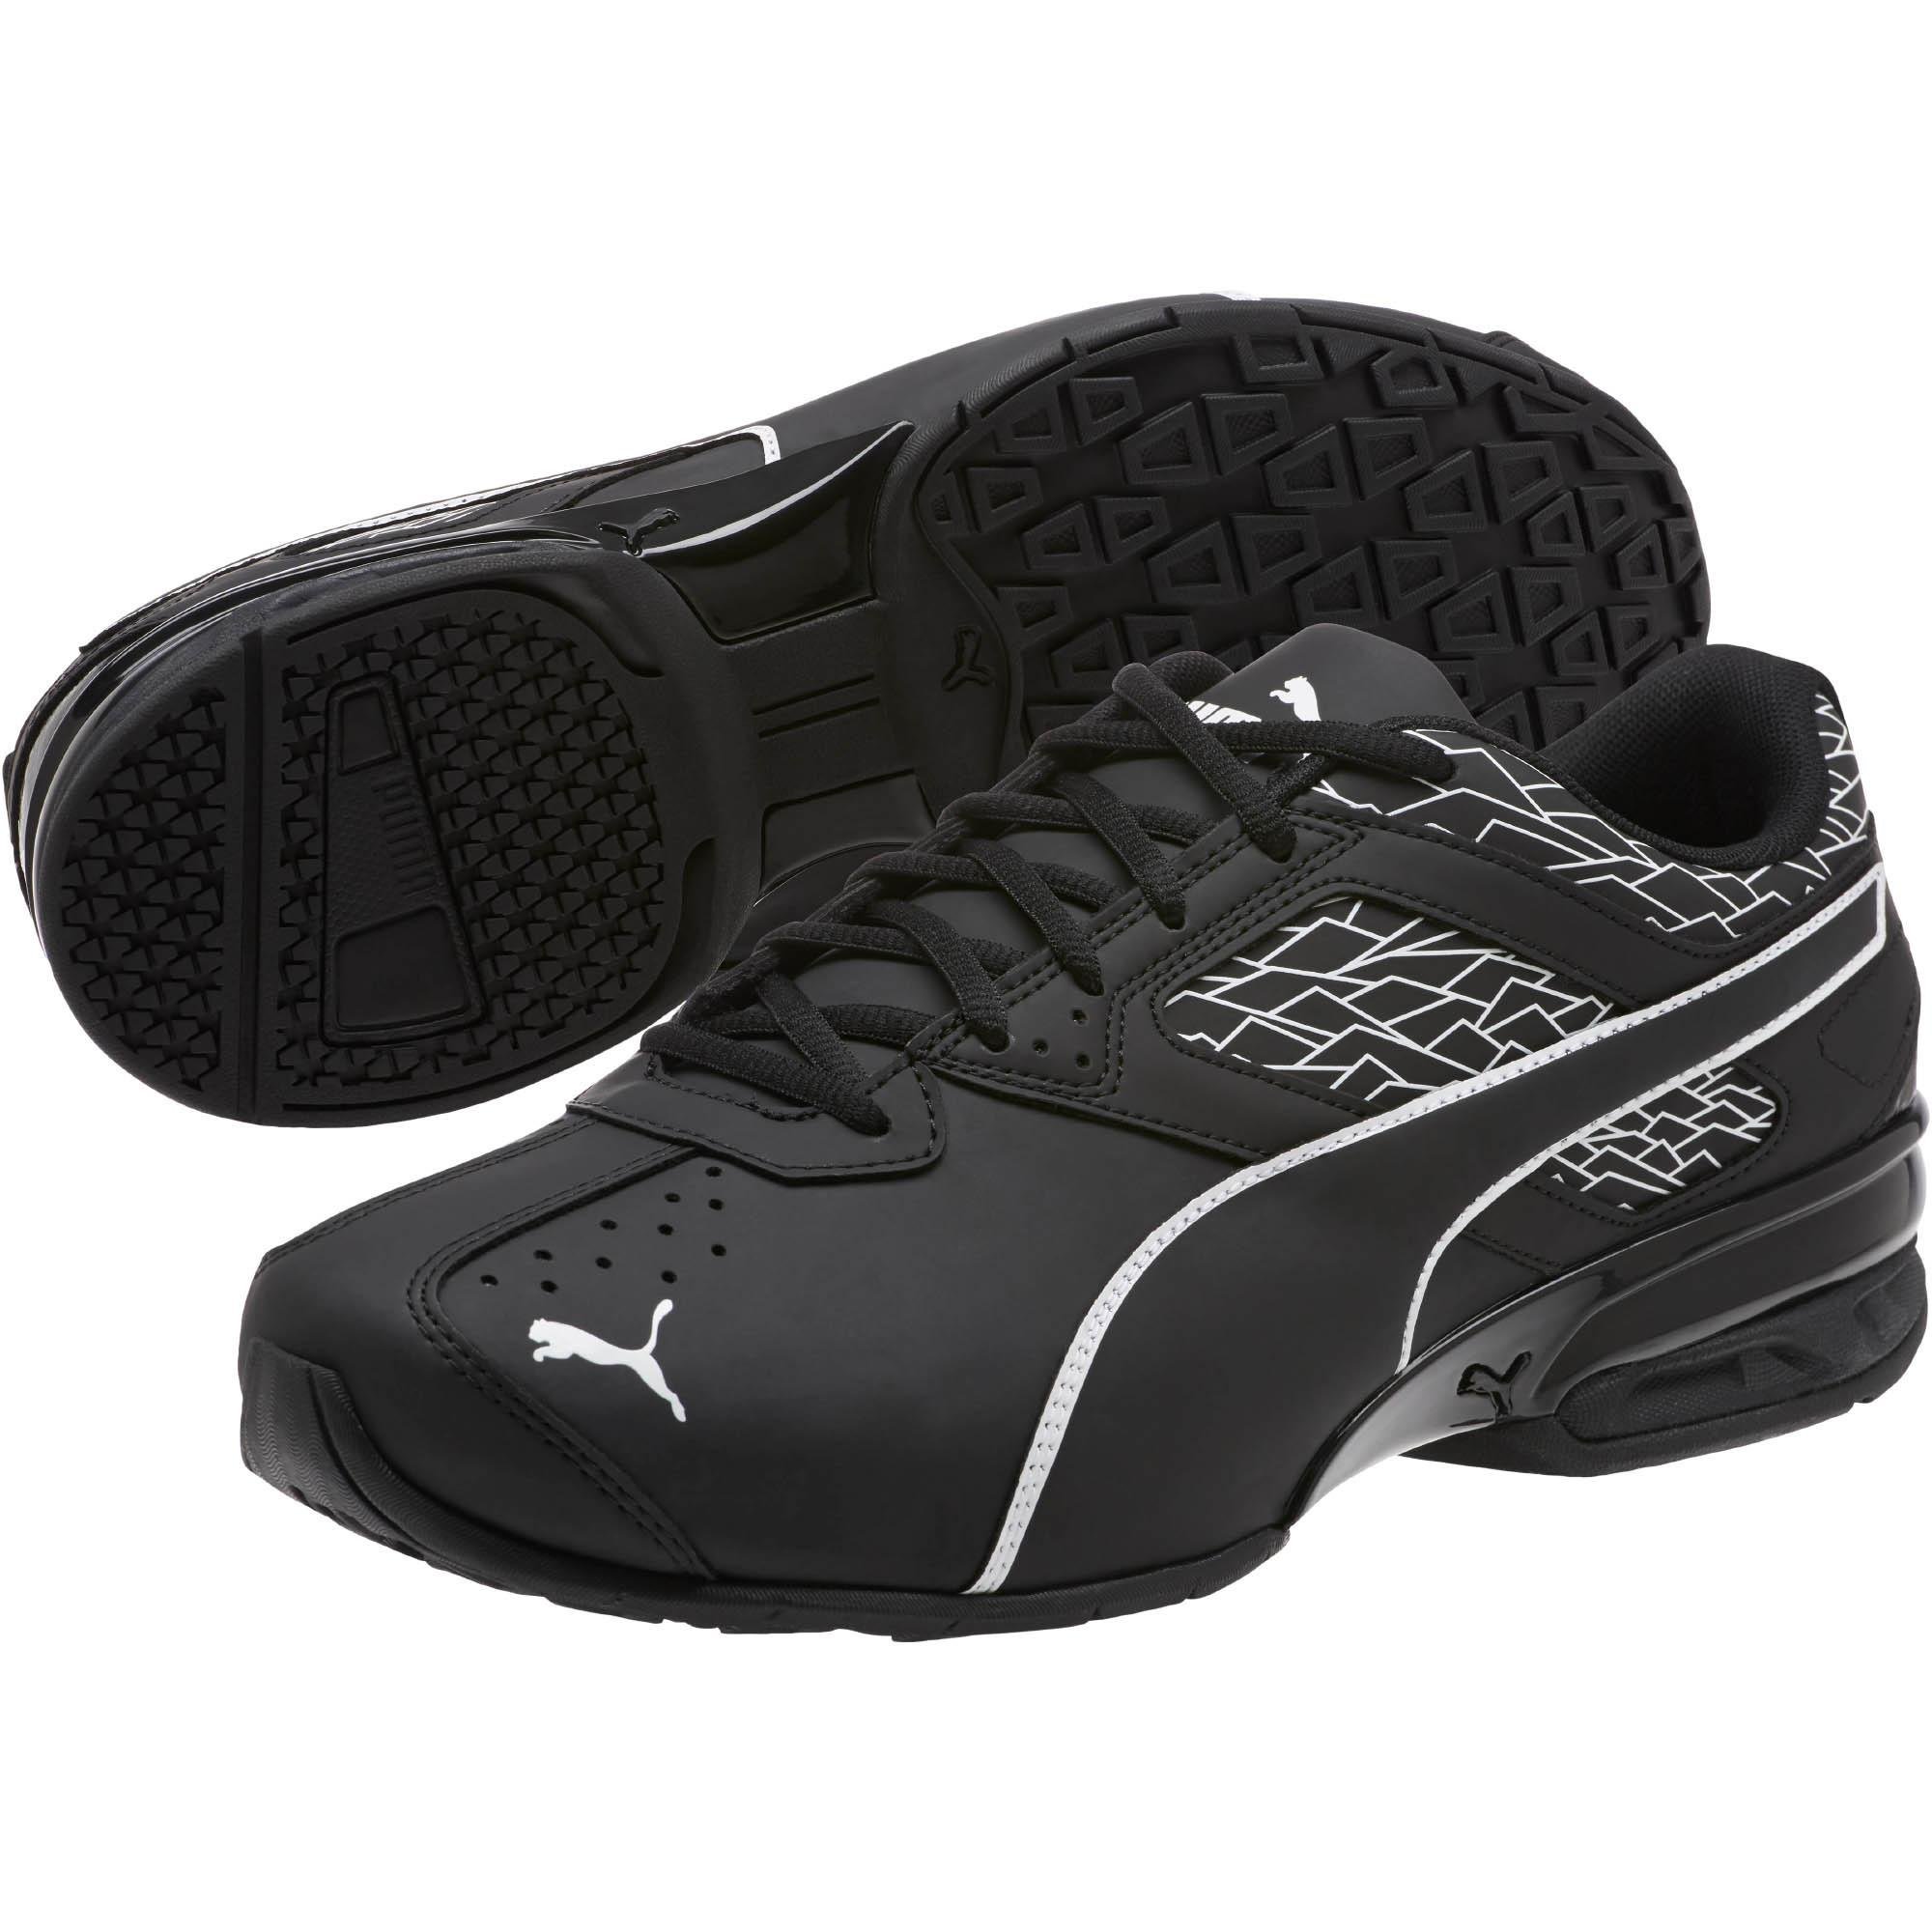 PUMA Tazon 6 Wide Fracture Fm Sneaker in Black for Men - Save 4% - Lyst